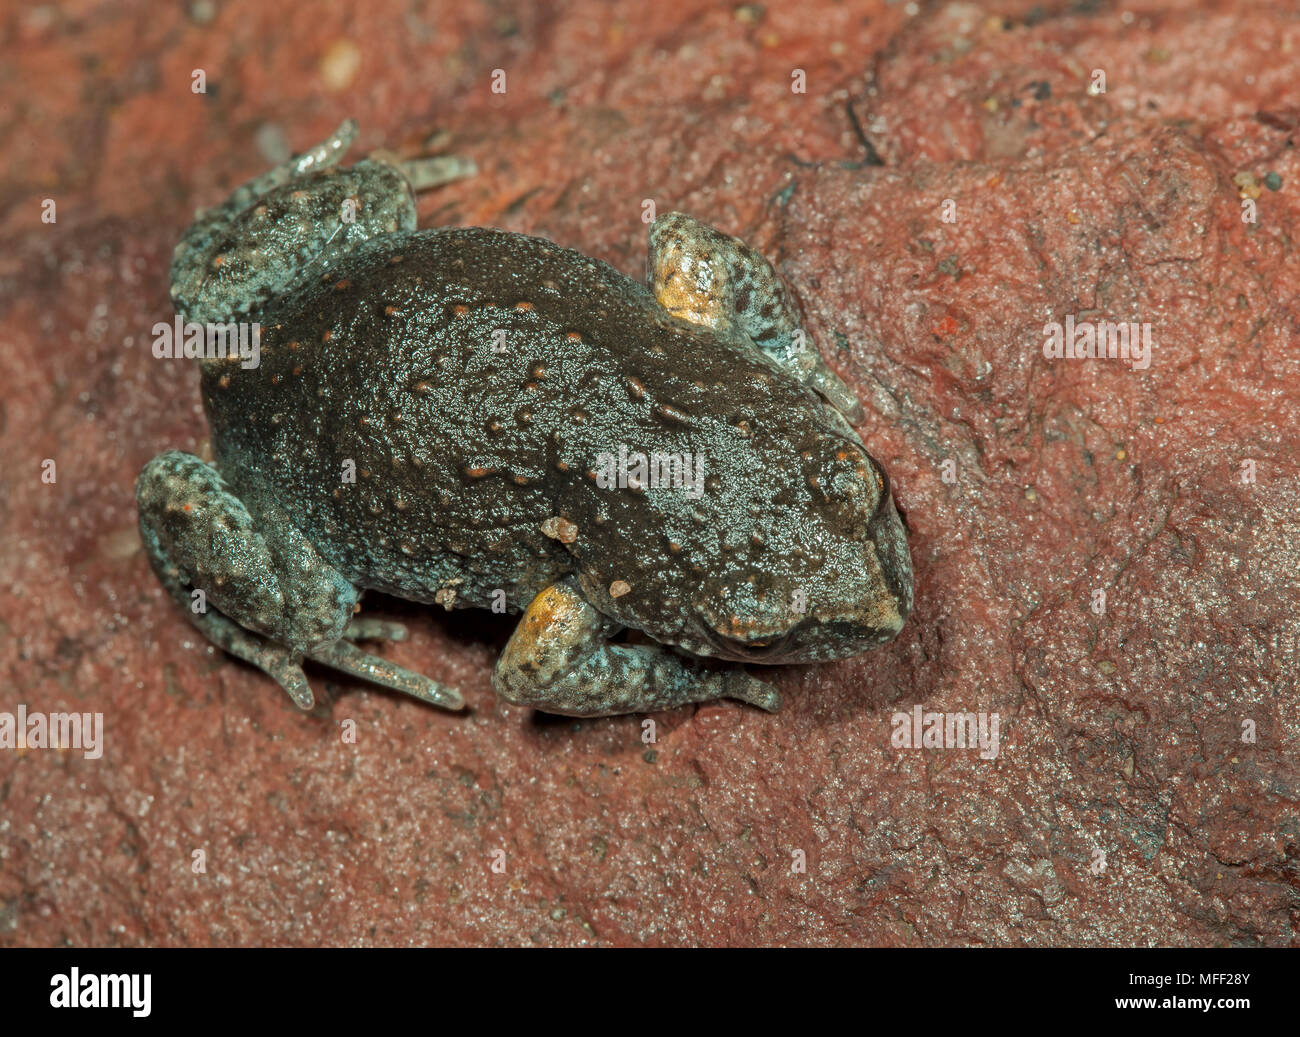 Bibron's toadlet (Pseudophryne bibronii), fam. Myobatrachidae, Warrumbungles National Park, New South Wales, Australia Foto Stock